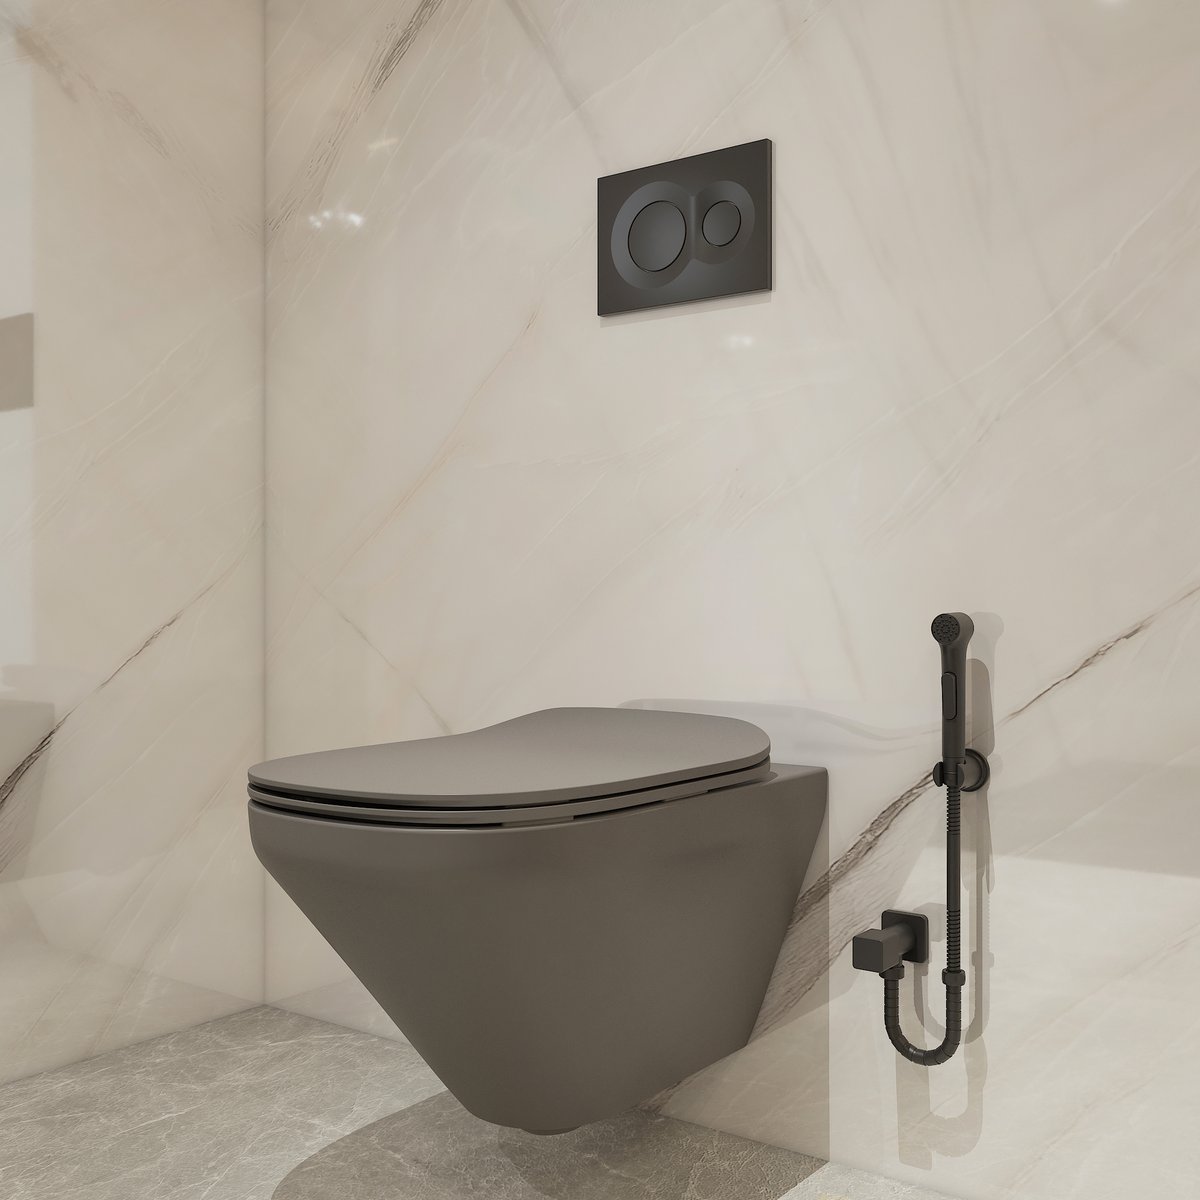 What gives a #KohlerBoldLook a unique touch is the way it transforms a simple space into a memorable experience. Here is one elegant setup. #Kohler #KohlerIndia #BathroomDecor #DecorInspo #LuxurySpaces #LuxuryLifestyle #BathroomDesign #HomeDecor #BathroomDecorInspiration